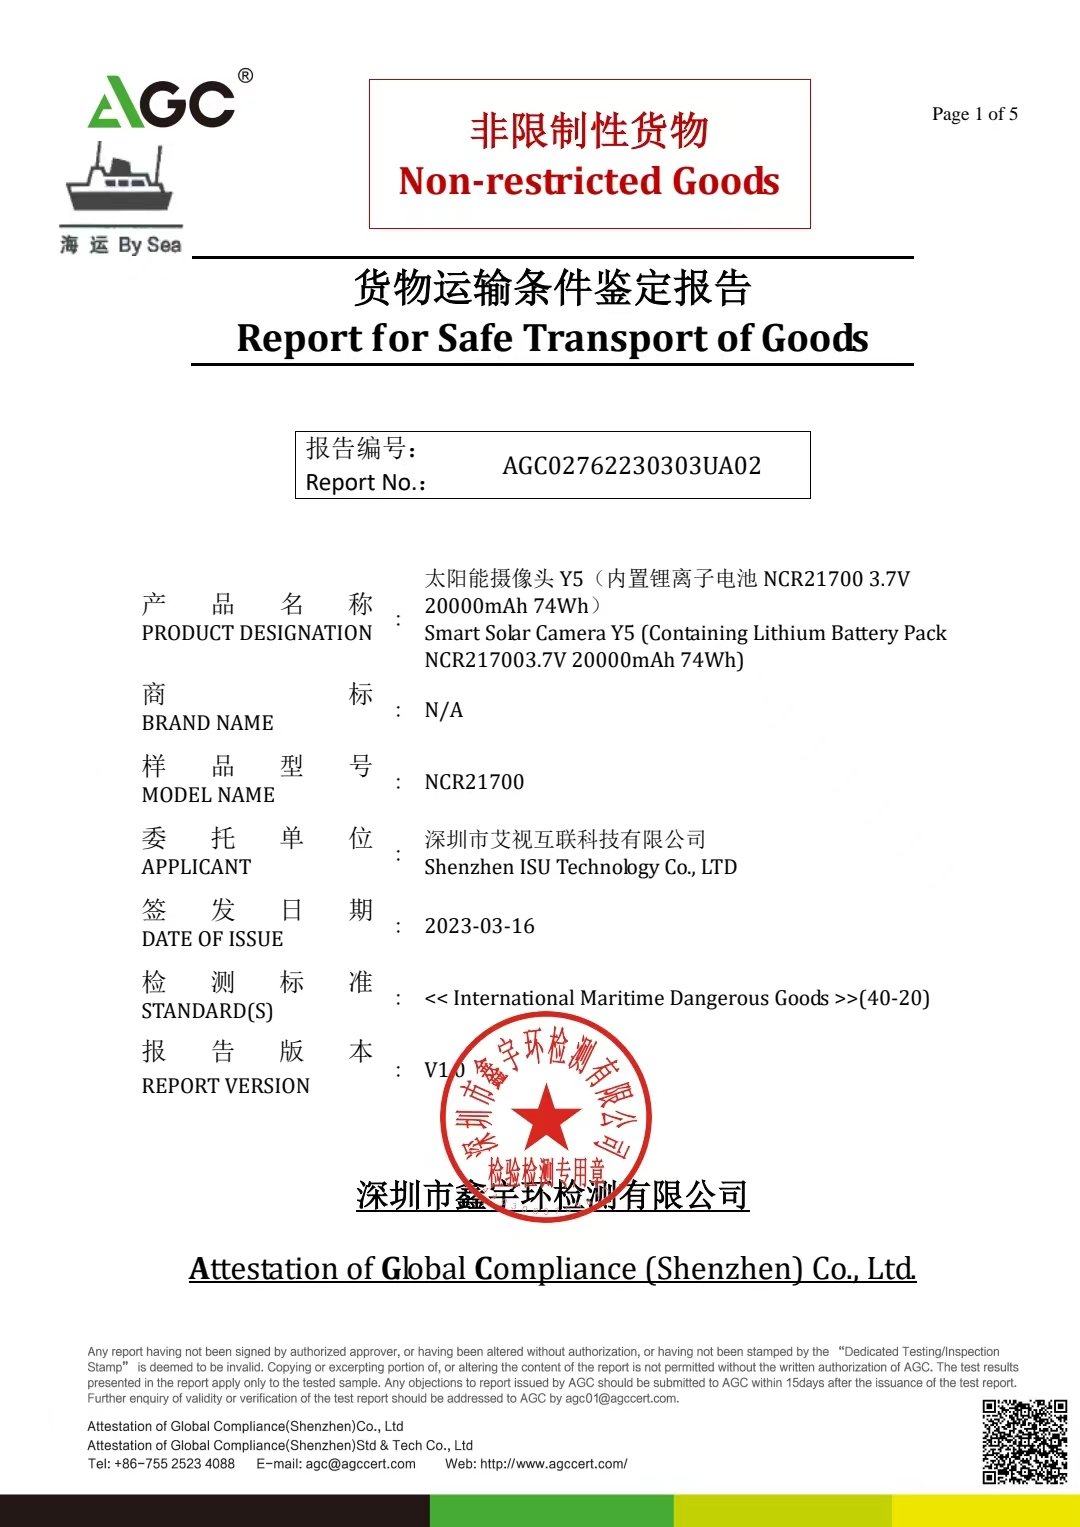 Report for safe Transport of Goods